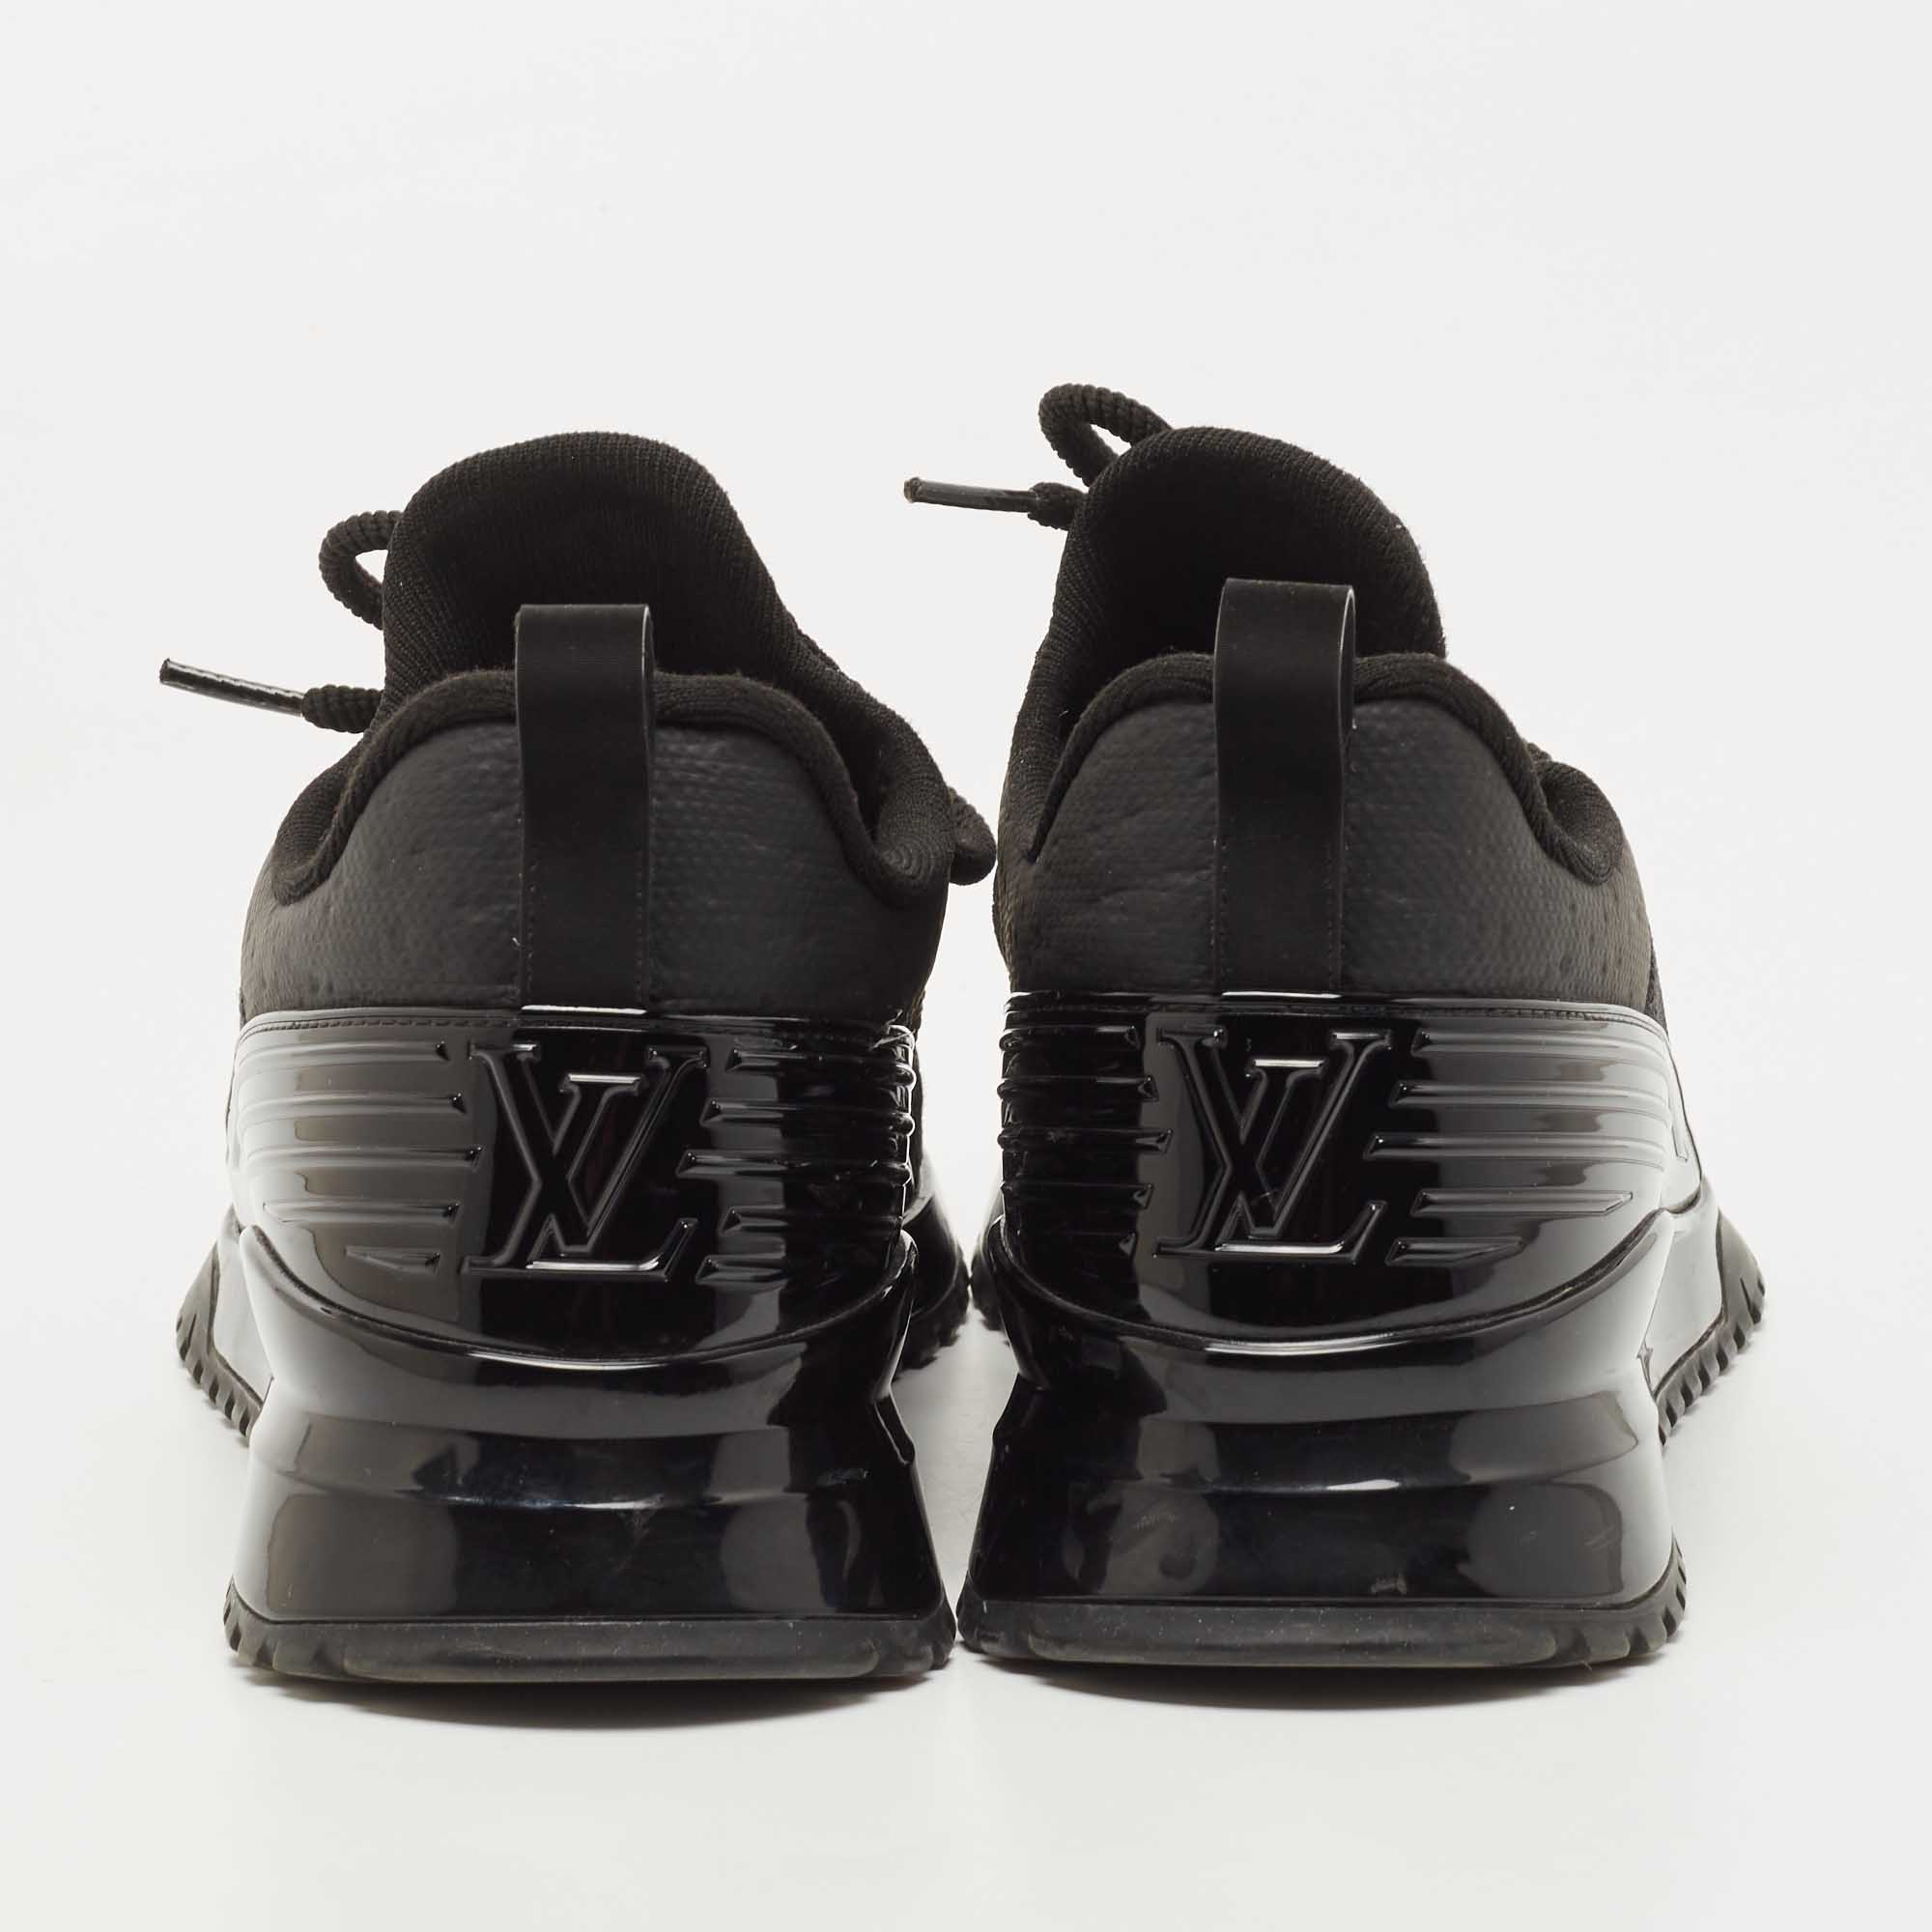 LOUIS VUITTON Technical Knit Mens V.N.R Sneakers 8 Black 1253070